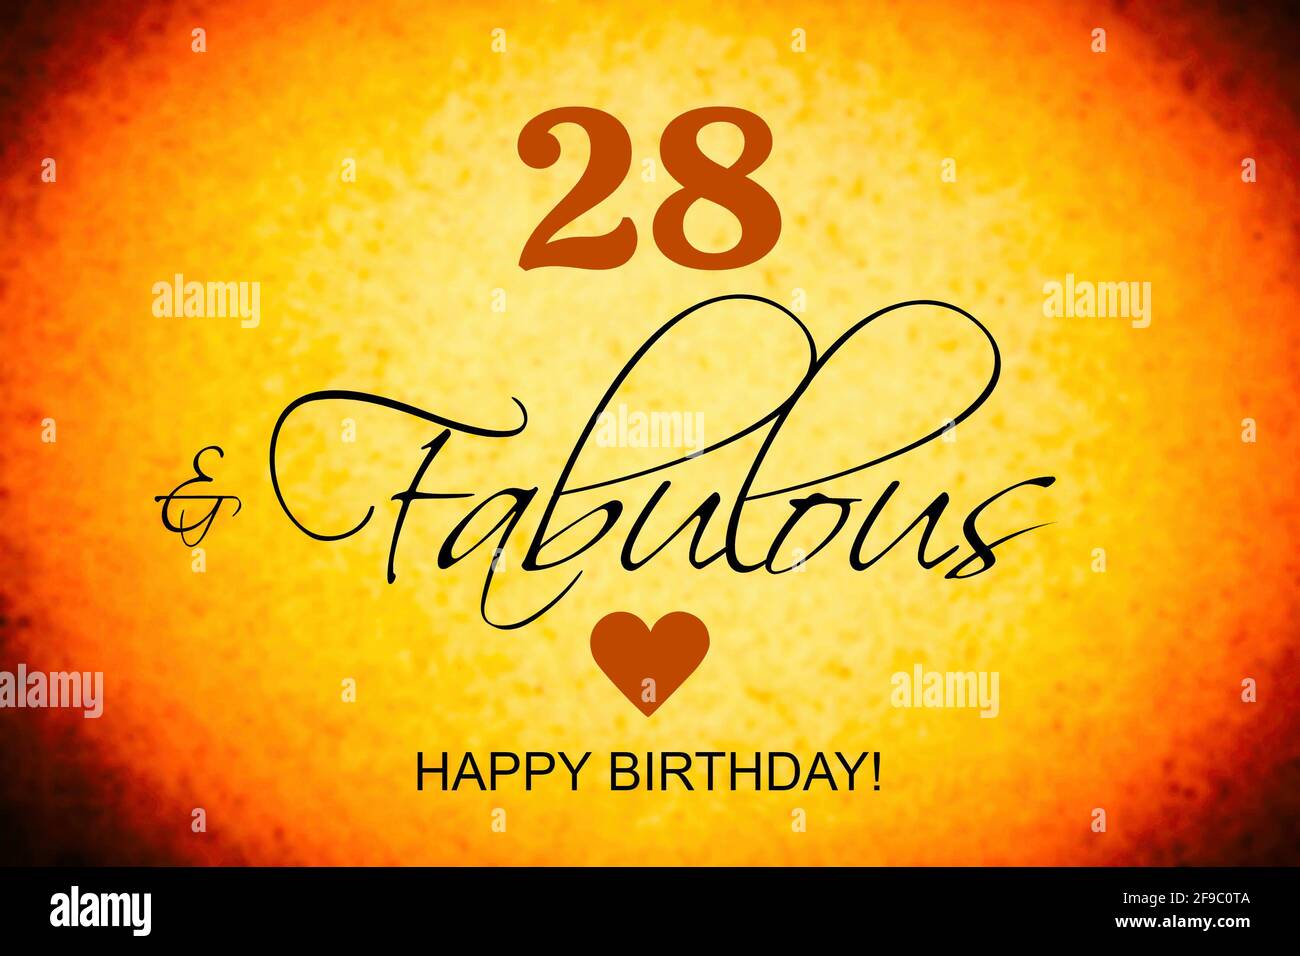 28th birthday card wishes illustration Stock Photo - Alamy